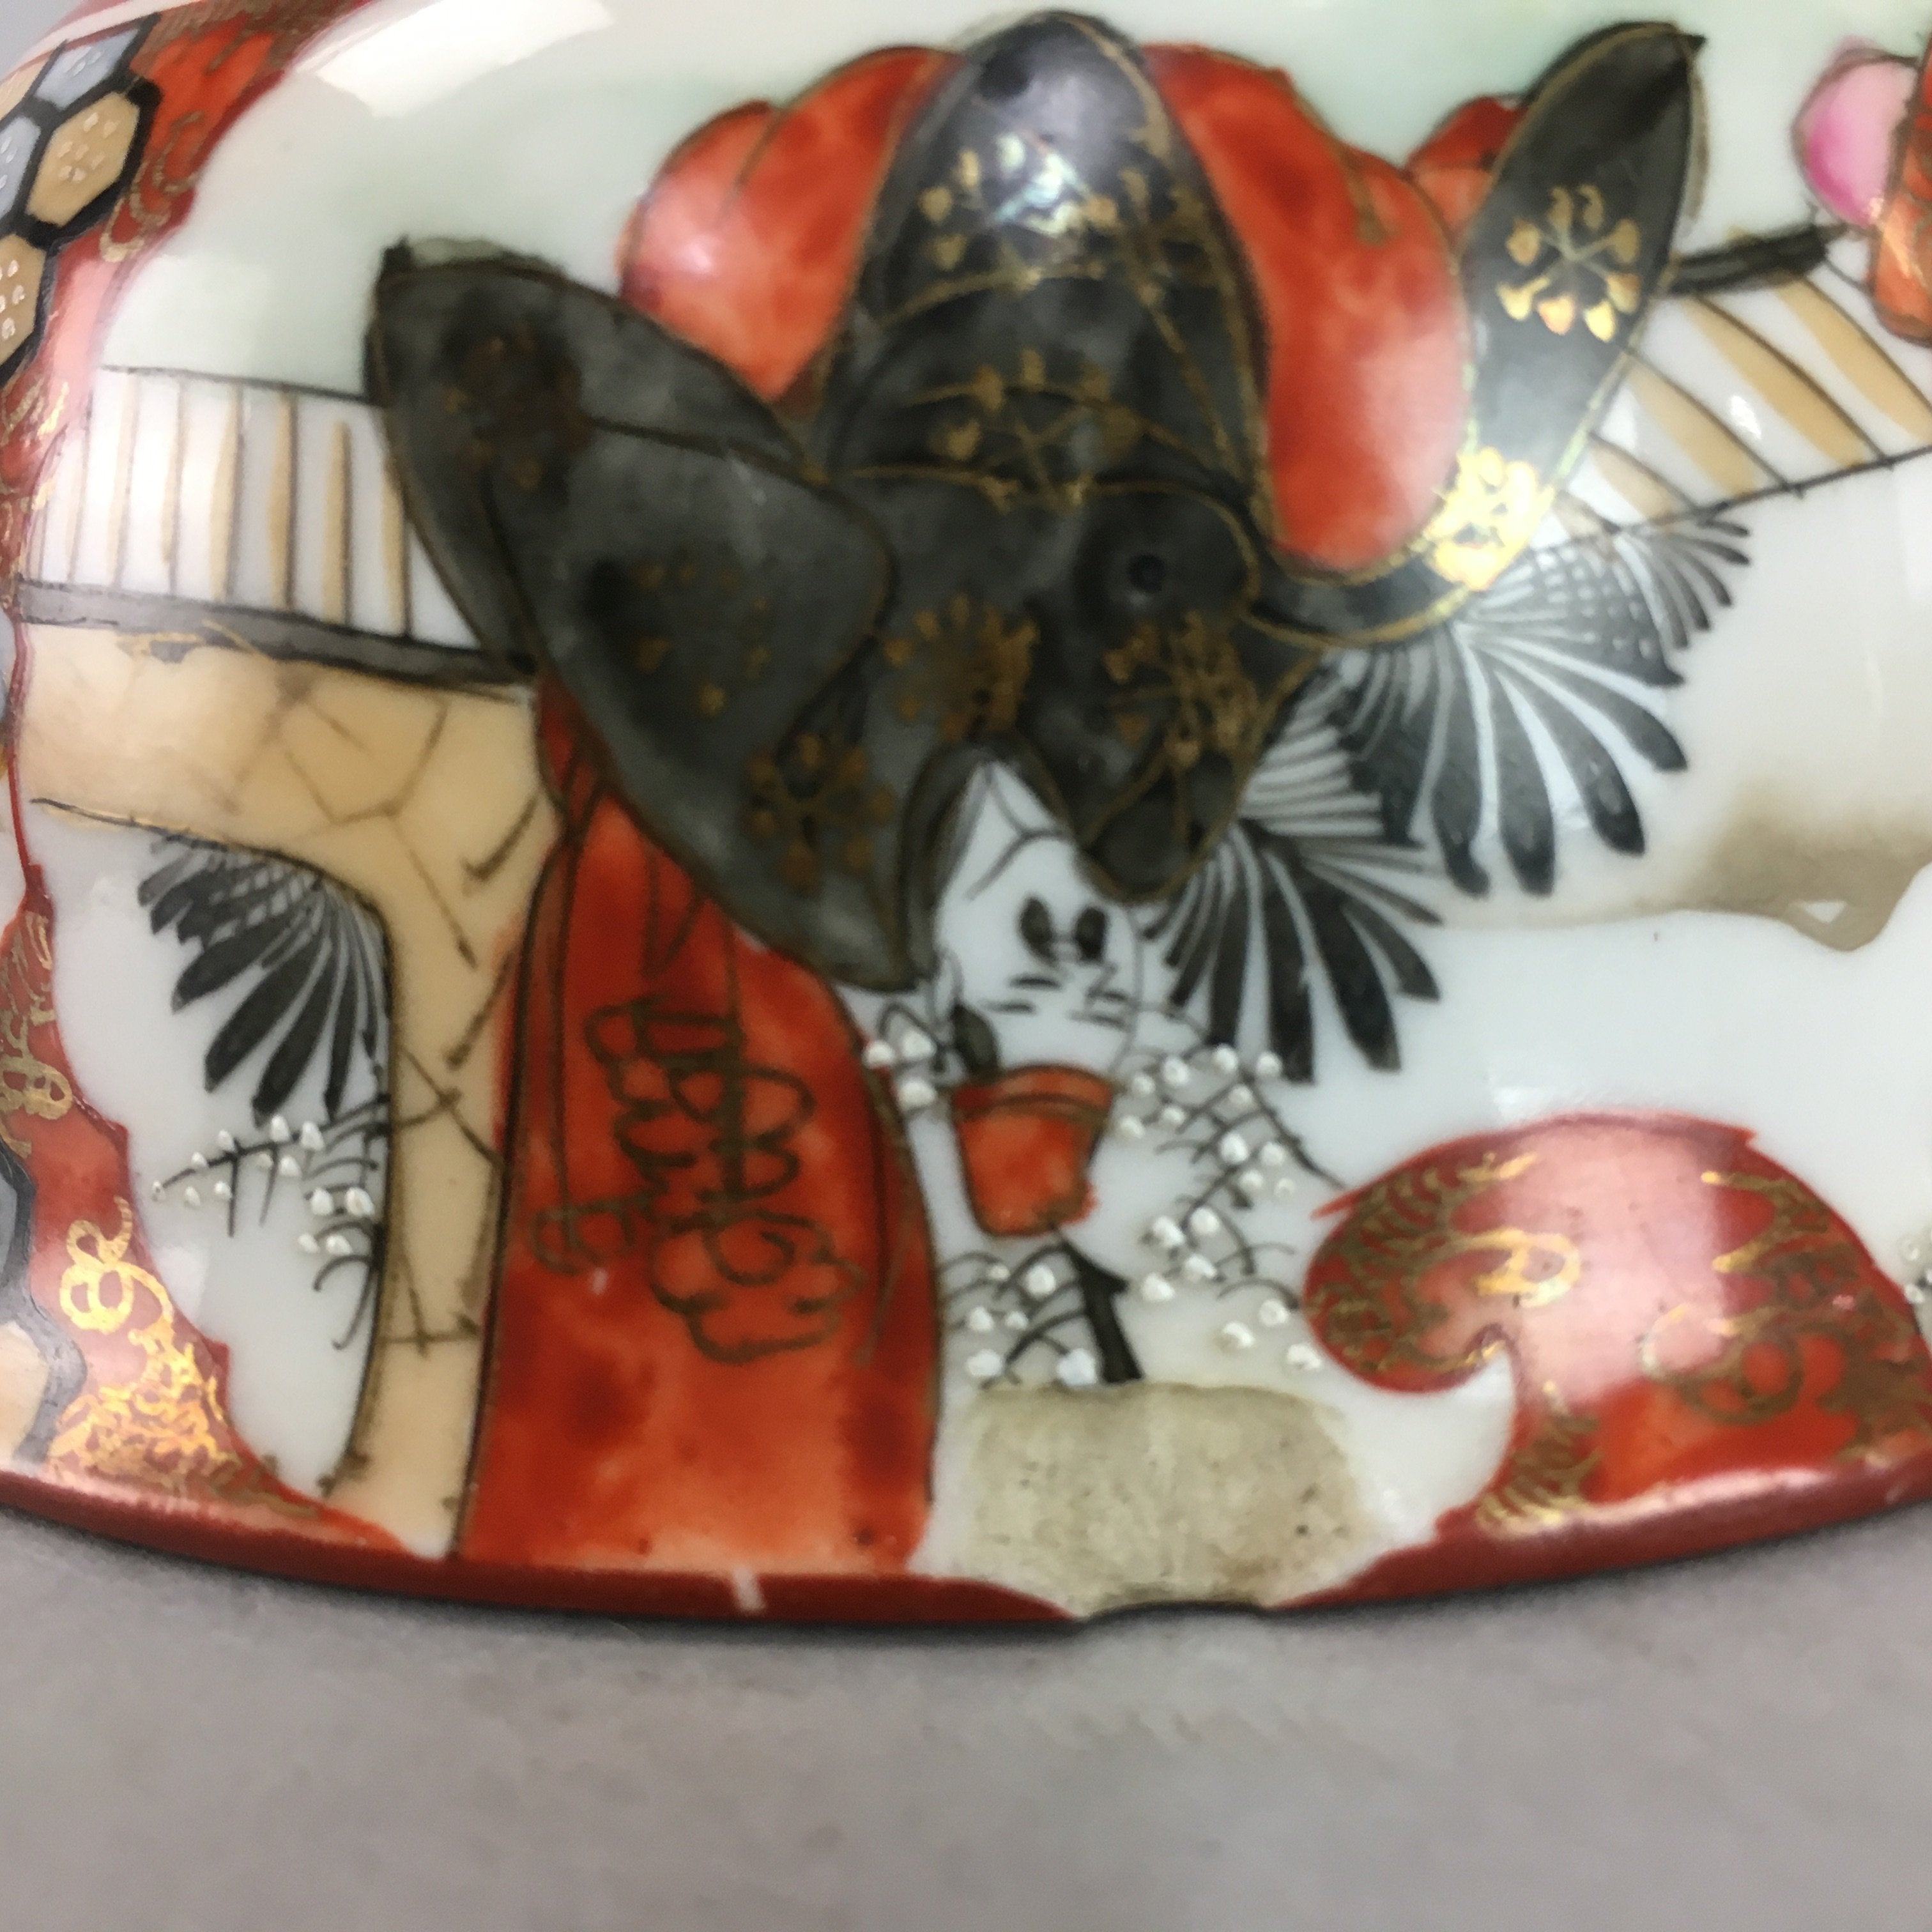 Japanese Kutani Lidded Rice Bowl Vtg Porcelain Floral Kimono Scenery C1930 PT732